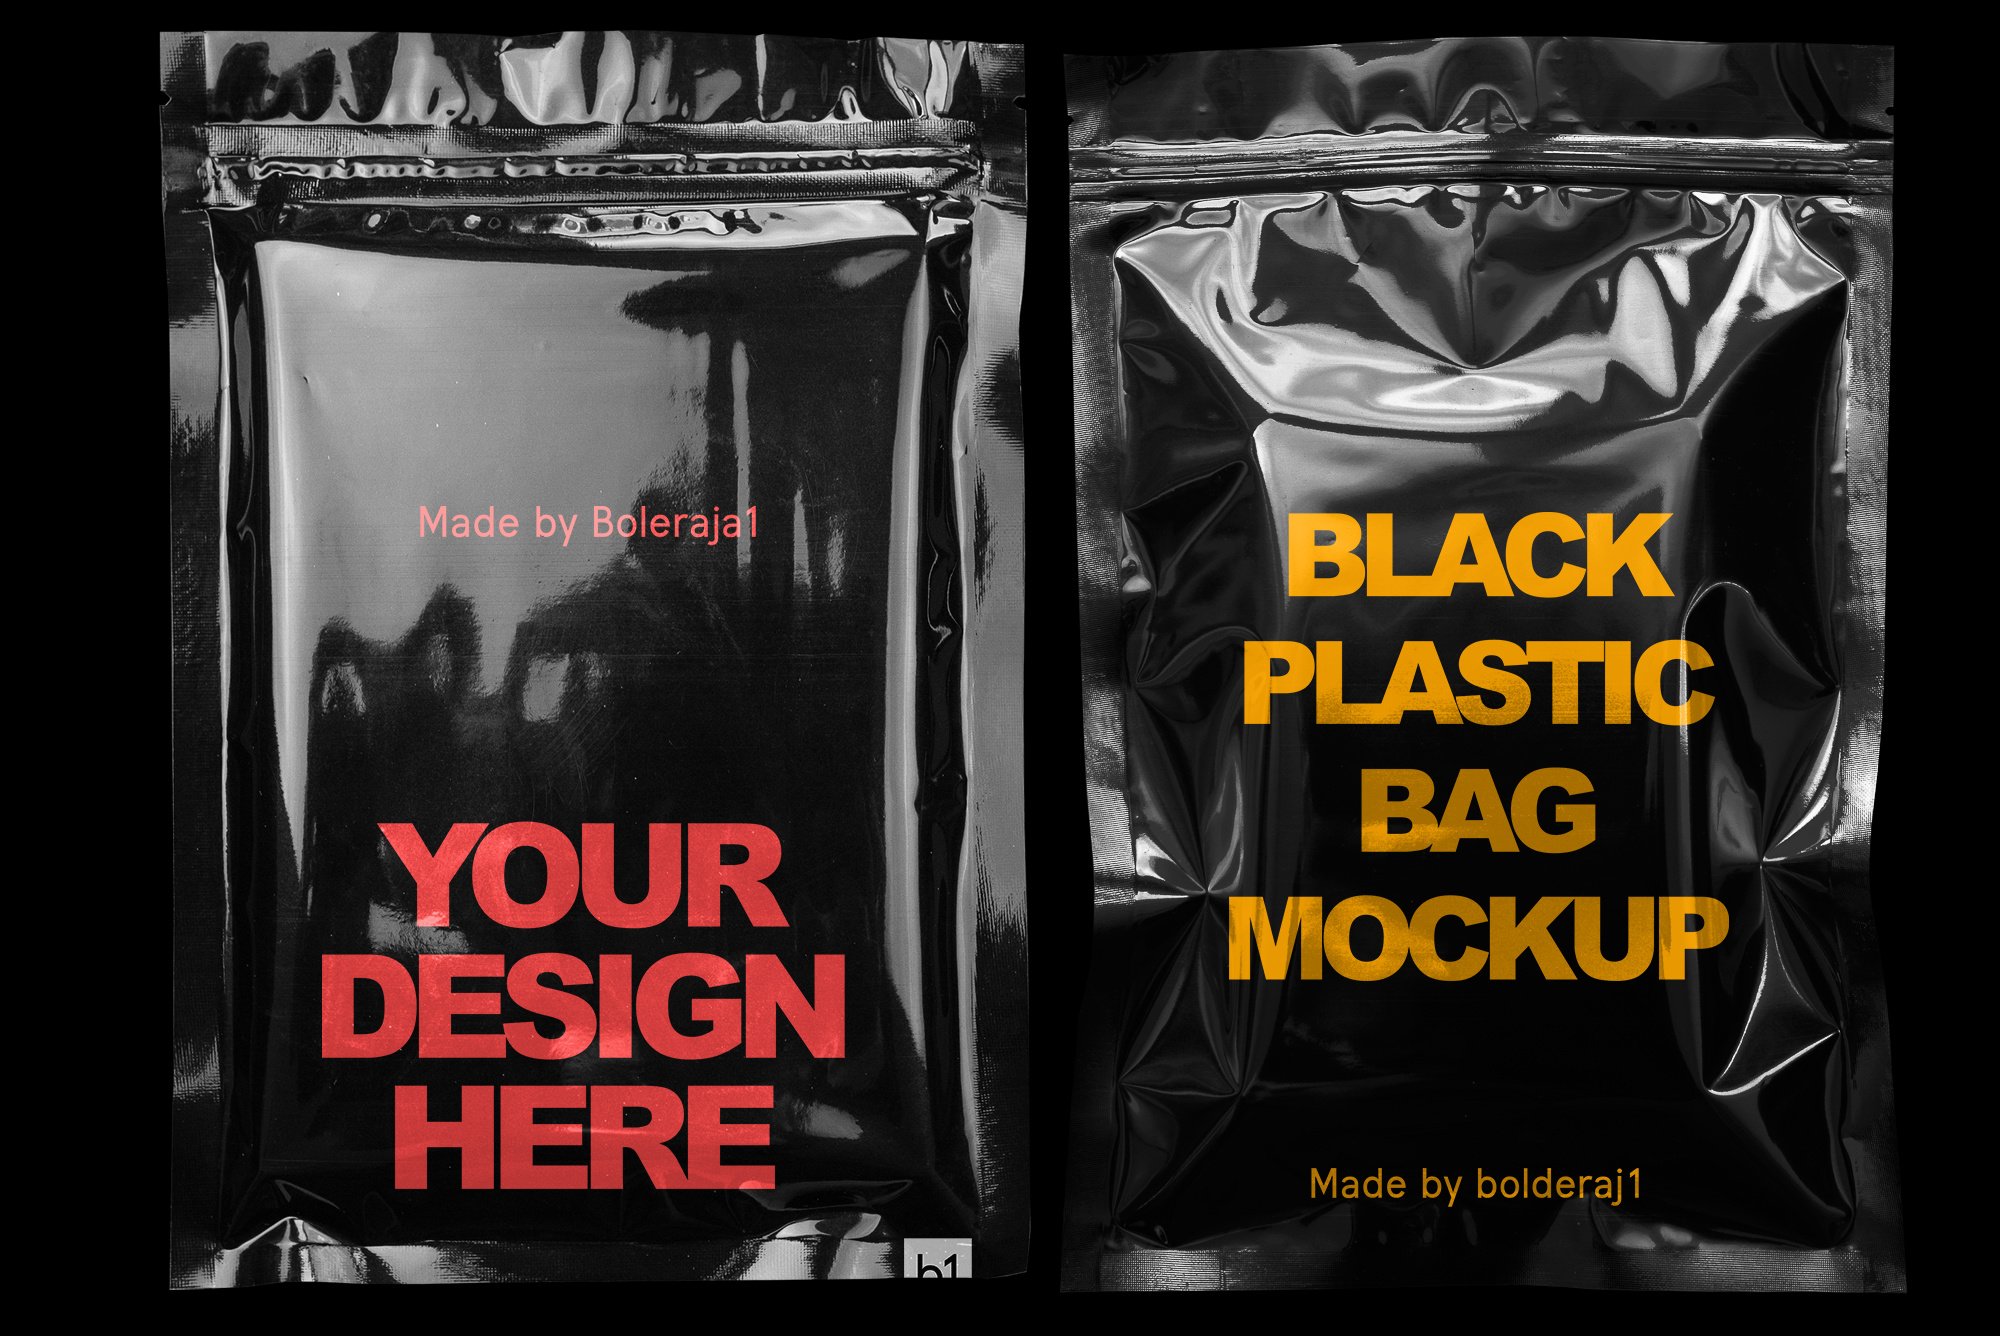 black plastic bag mockup bolderaja12 540